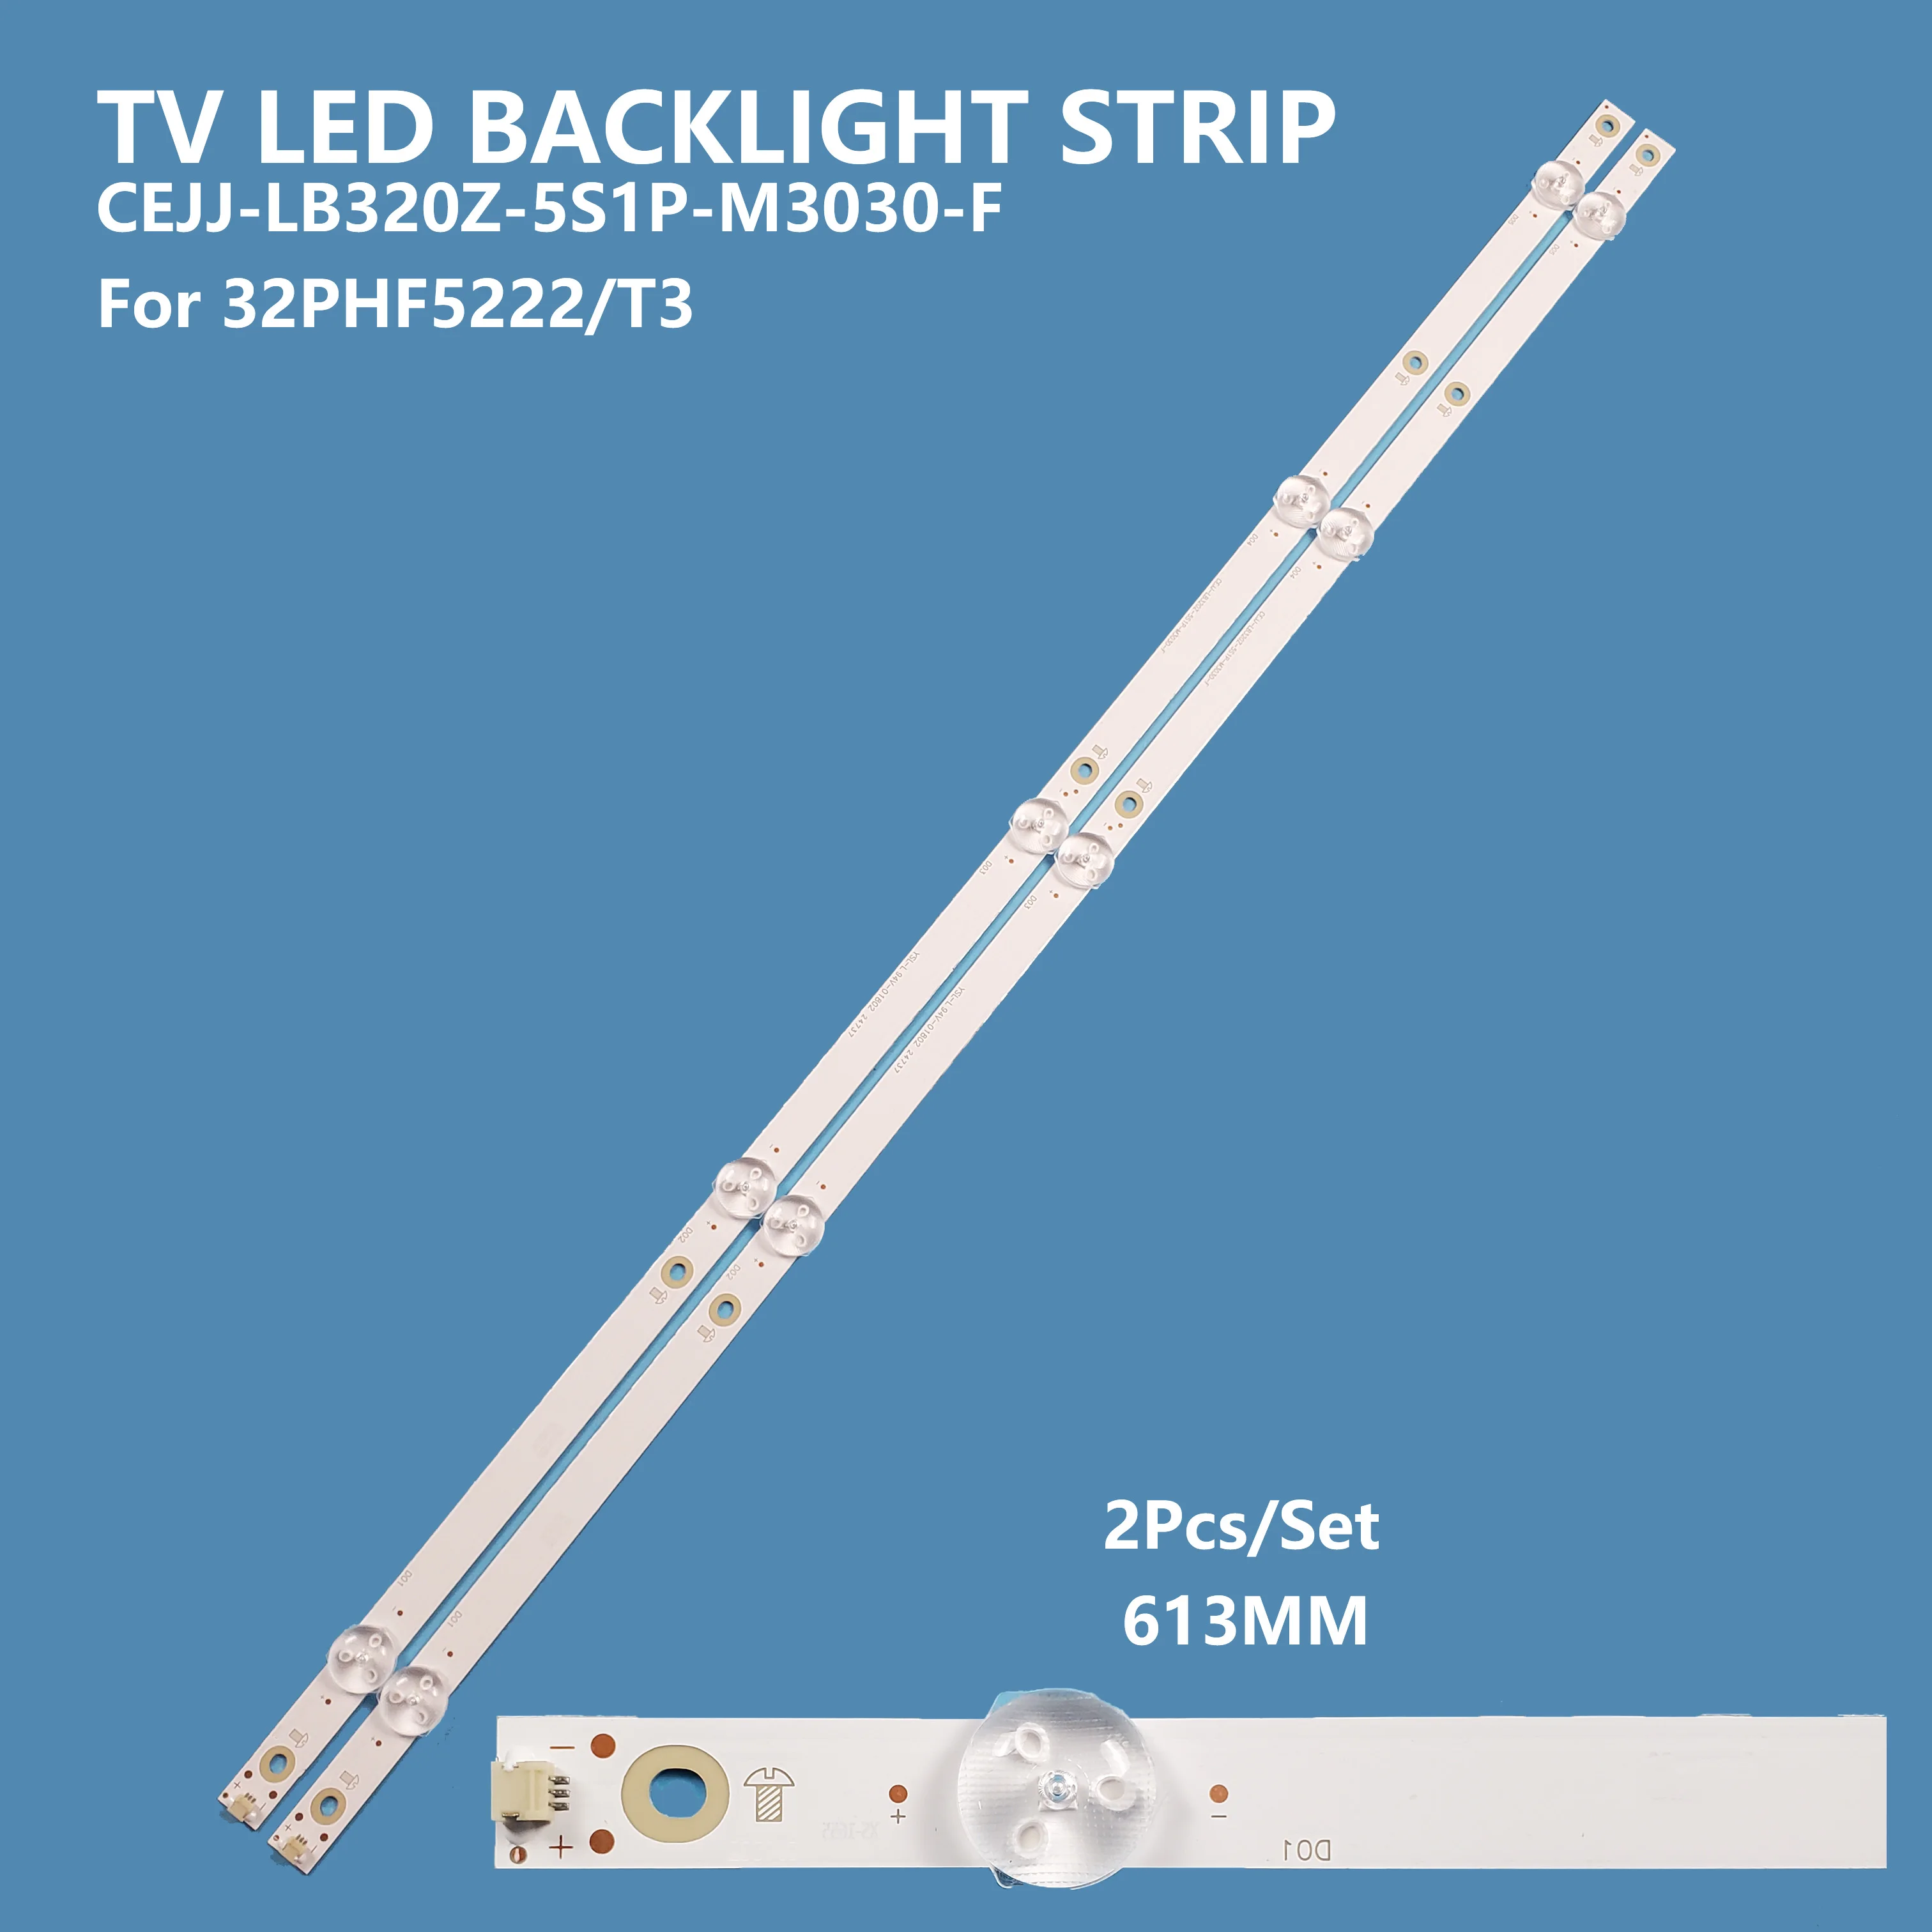 2PCS/set New Arrival TV Led Backlight Strip CEJJ-LB320Z-5S1P-M3030-F For PHILIPS 32inch 32PHF5222/T3 tv Bar Light Accessories 2pcs set smart tv led backlight bar strip hs 018 d3200601 3030as 210916 2 01 0220008 6leds for 32inch tv lcd accessories repair